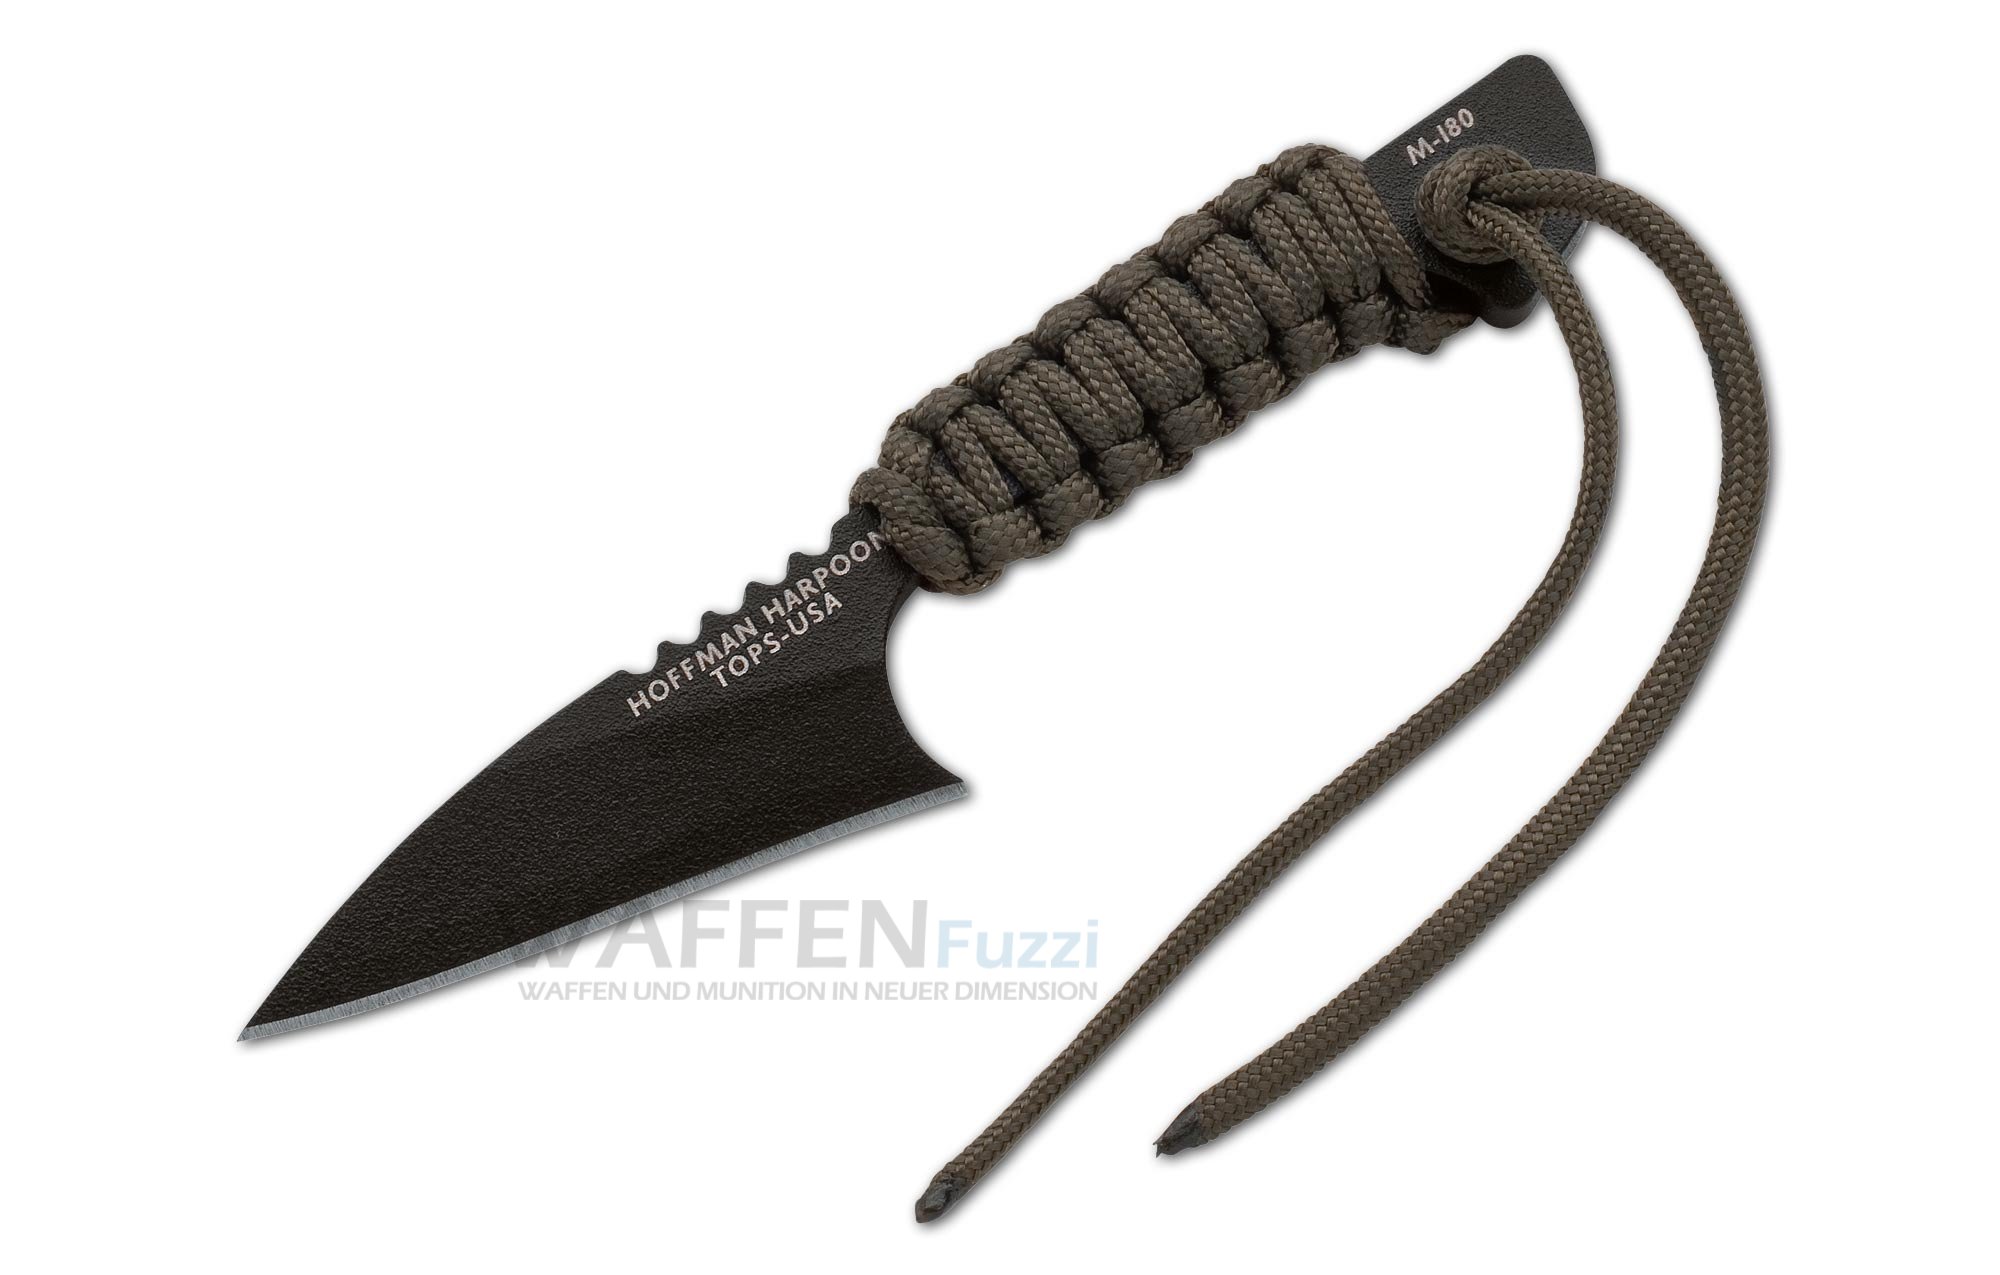 Hoffman Harpoon Tops Knives Survival Messer